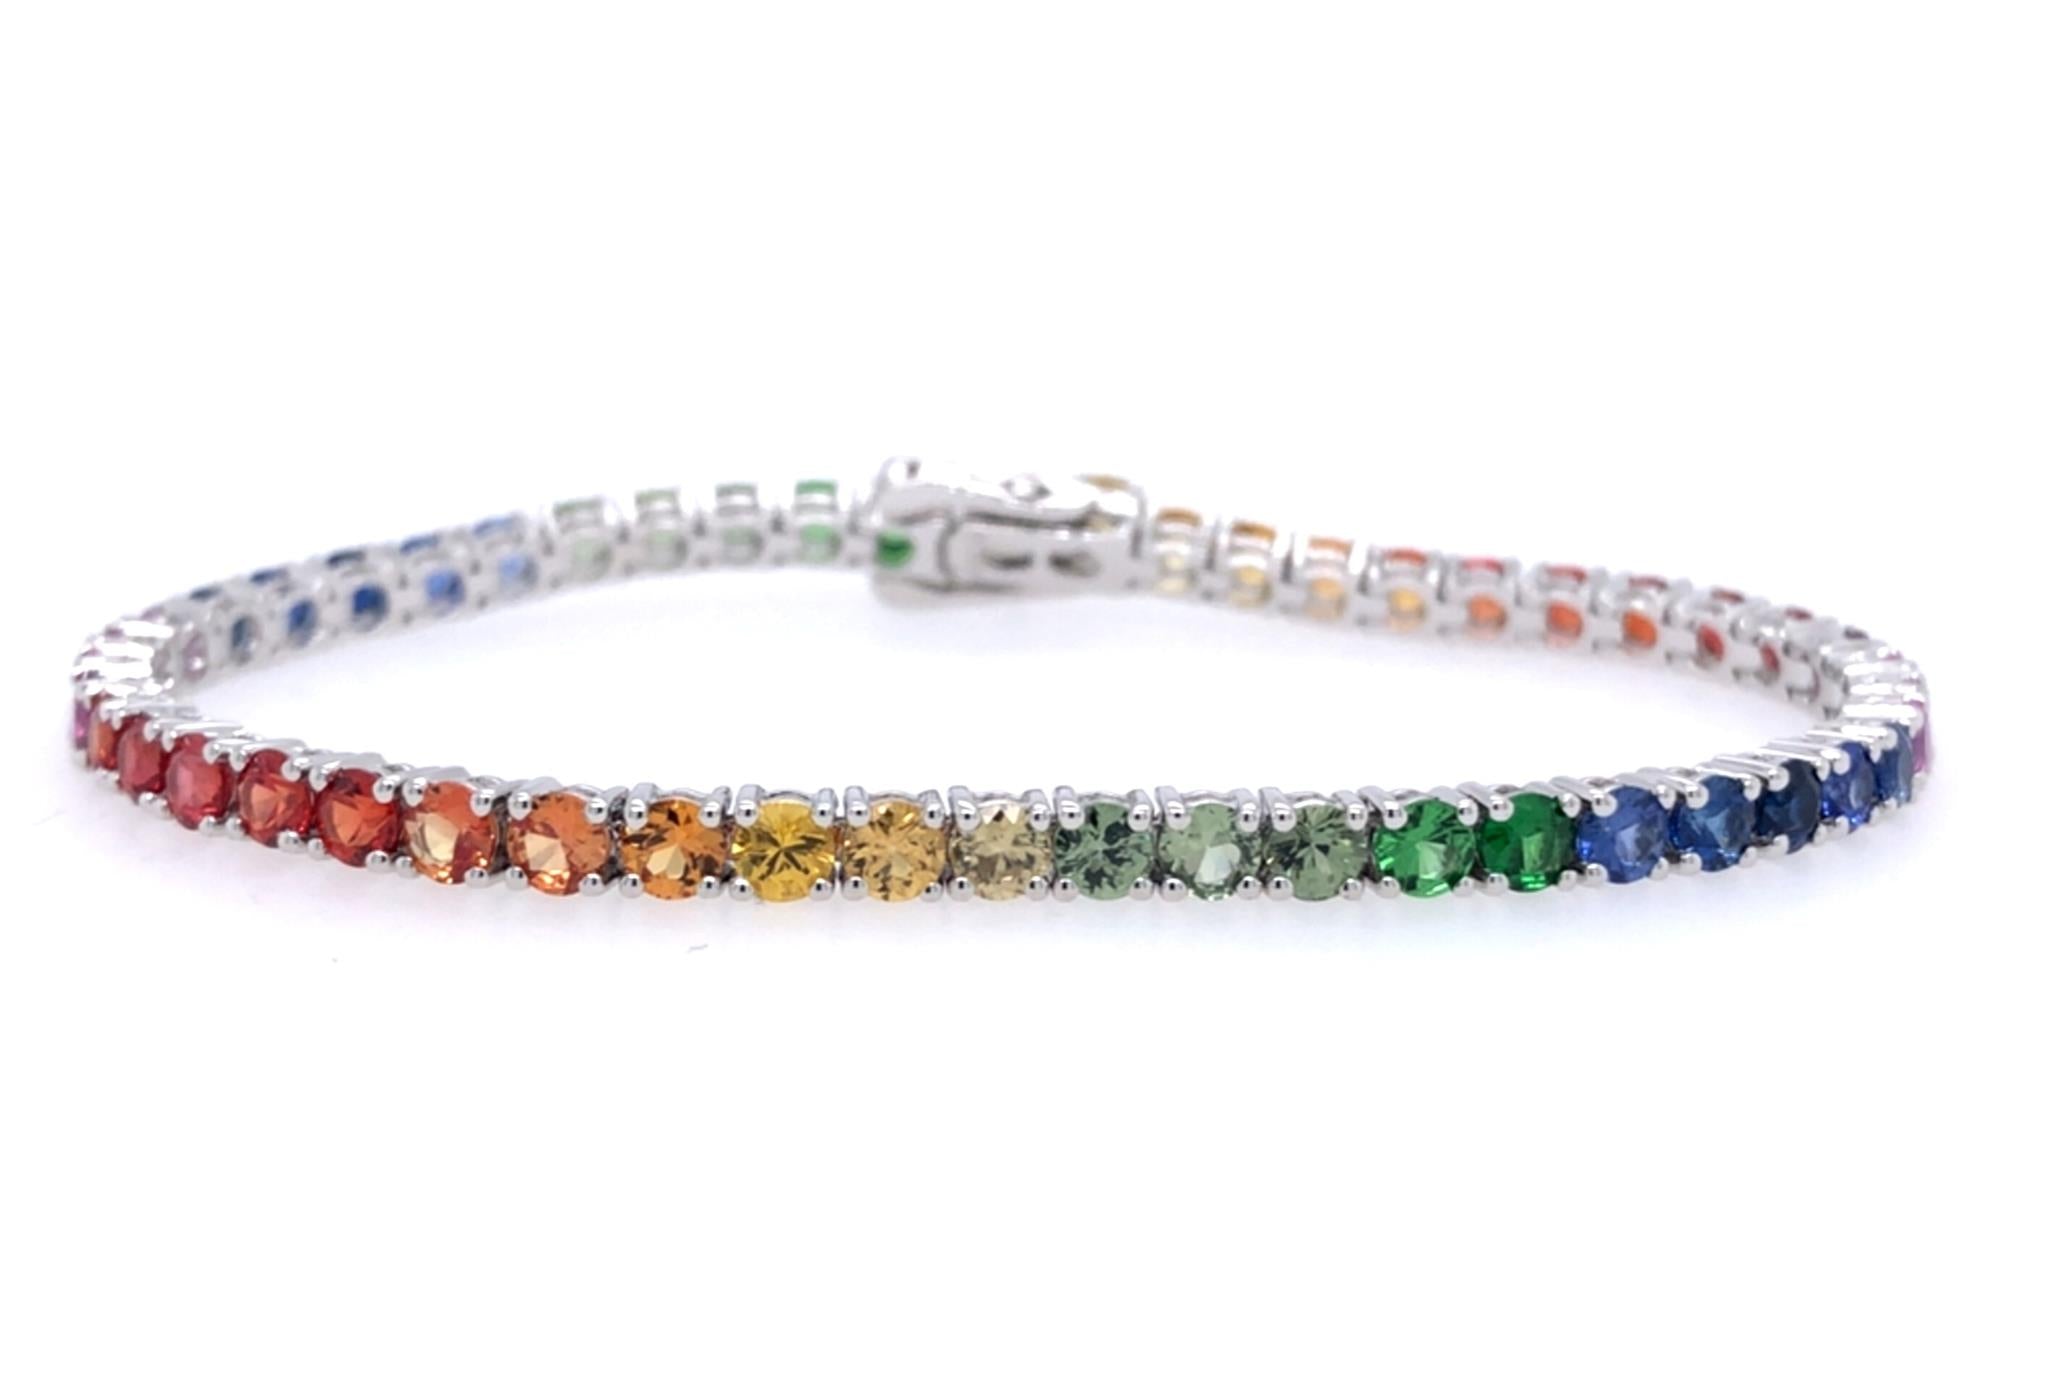 Colourful Cord Bracelets Project | Spotlight Australia